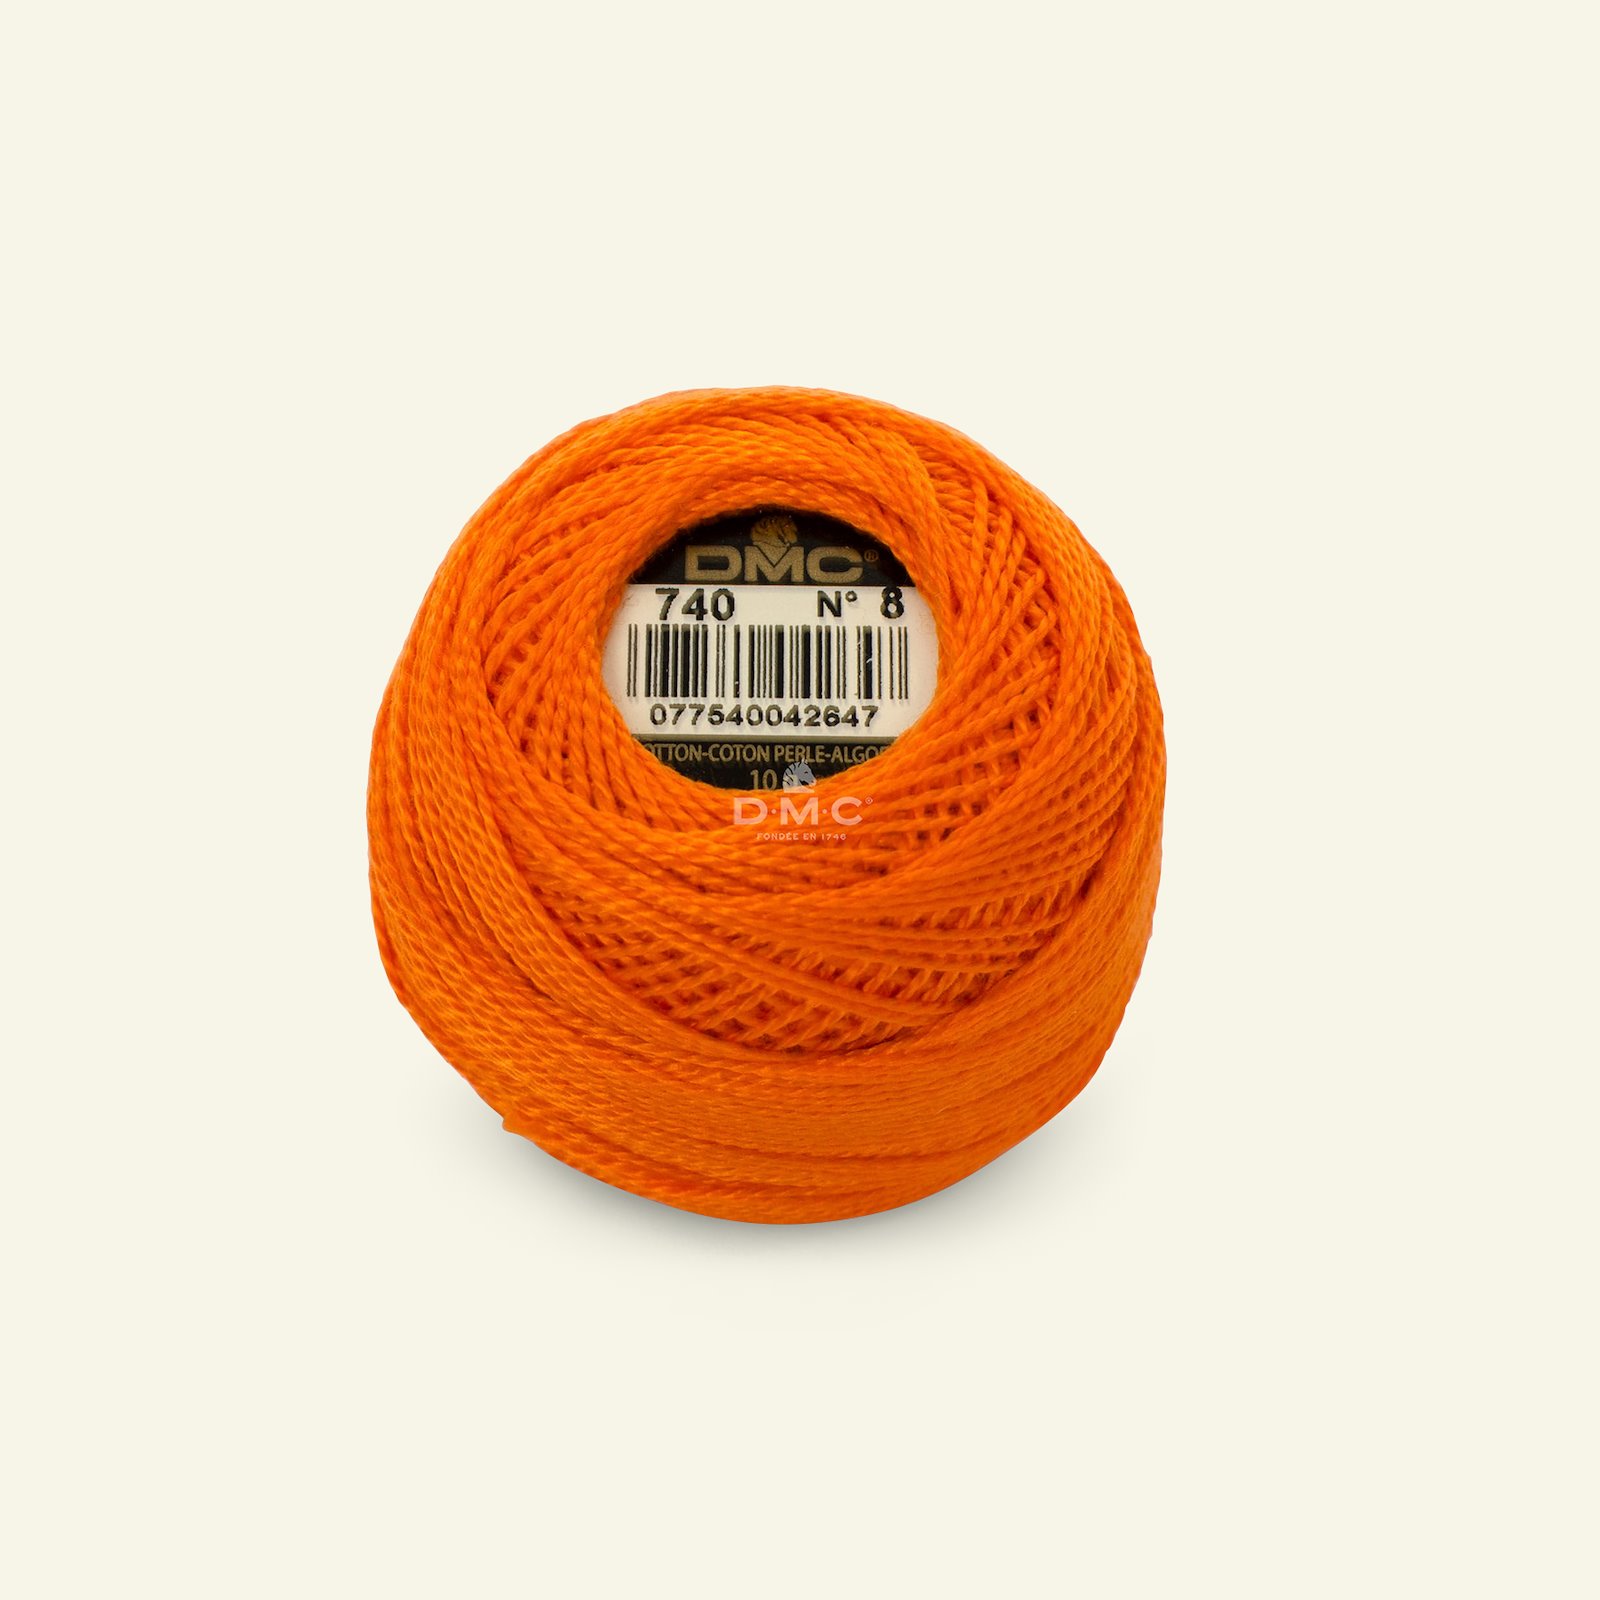 DMC Perlgarn Nr. 8 orange|Art. 116 Farbe 740 (Coton Perlé) 35115_pack